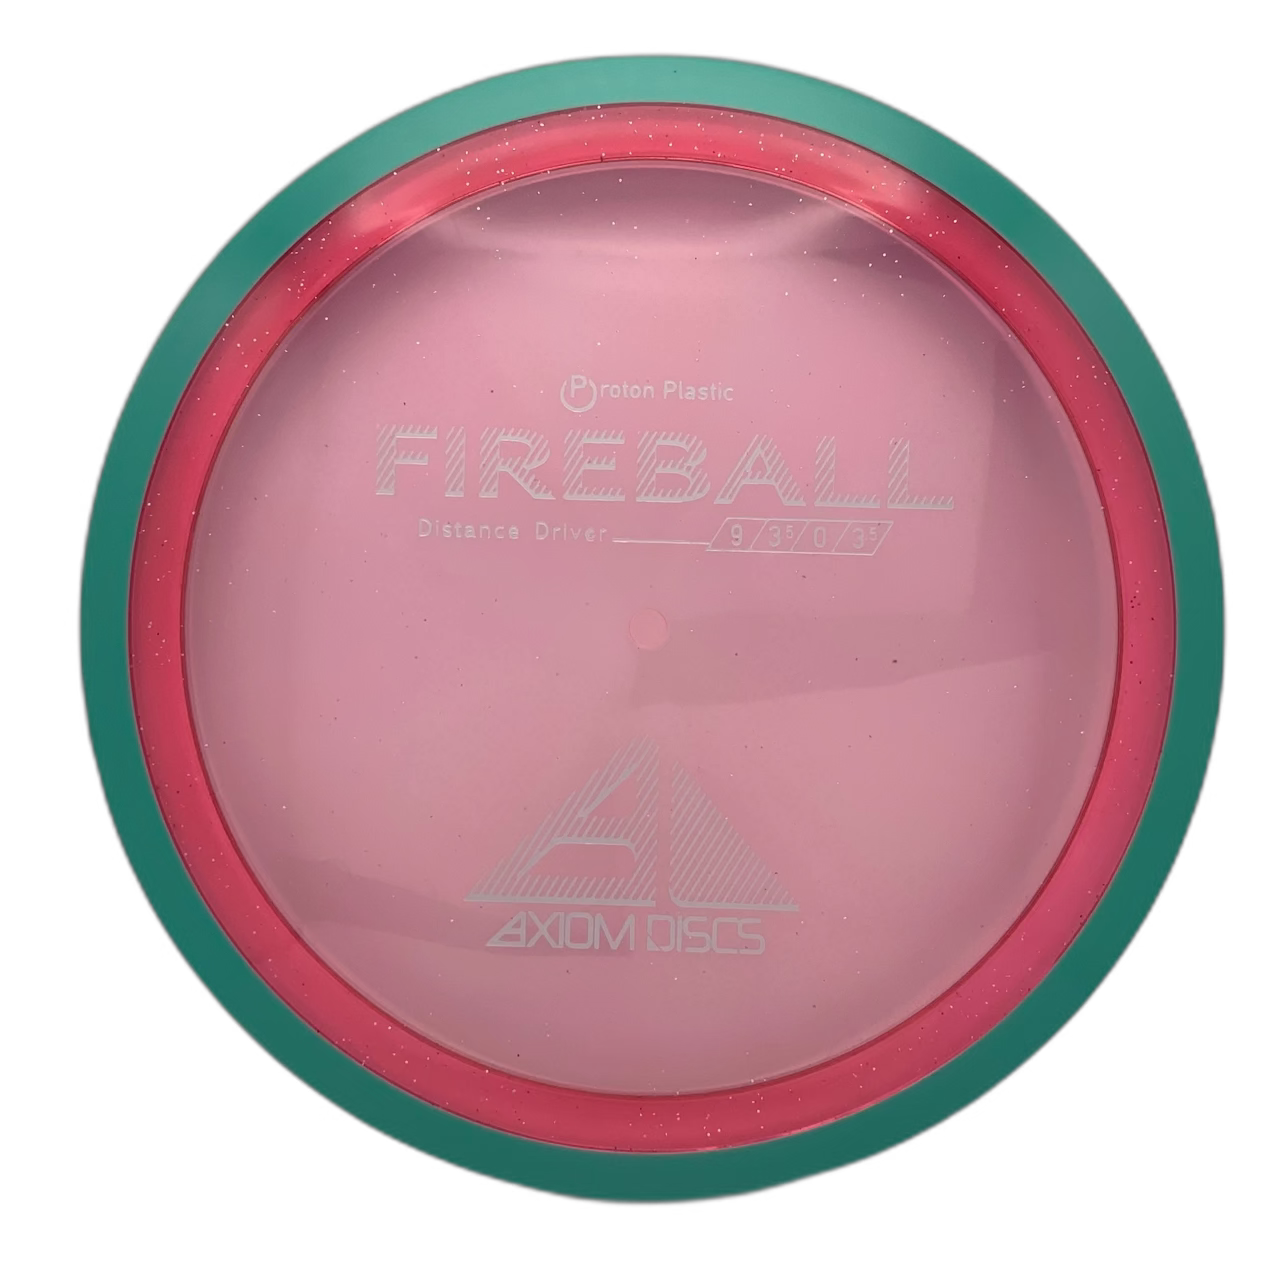 Axiom Fireball - Astro Discs TX - Houston Disc Golf